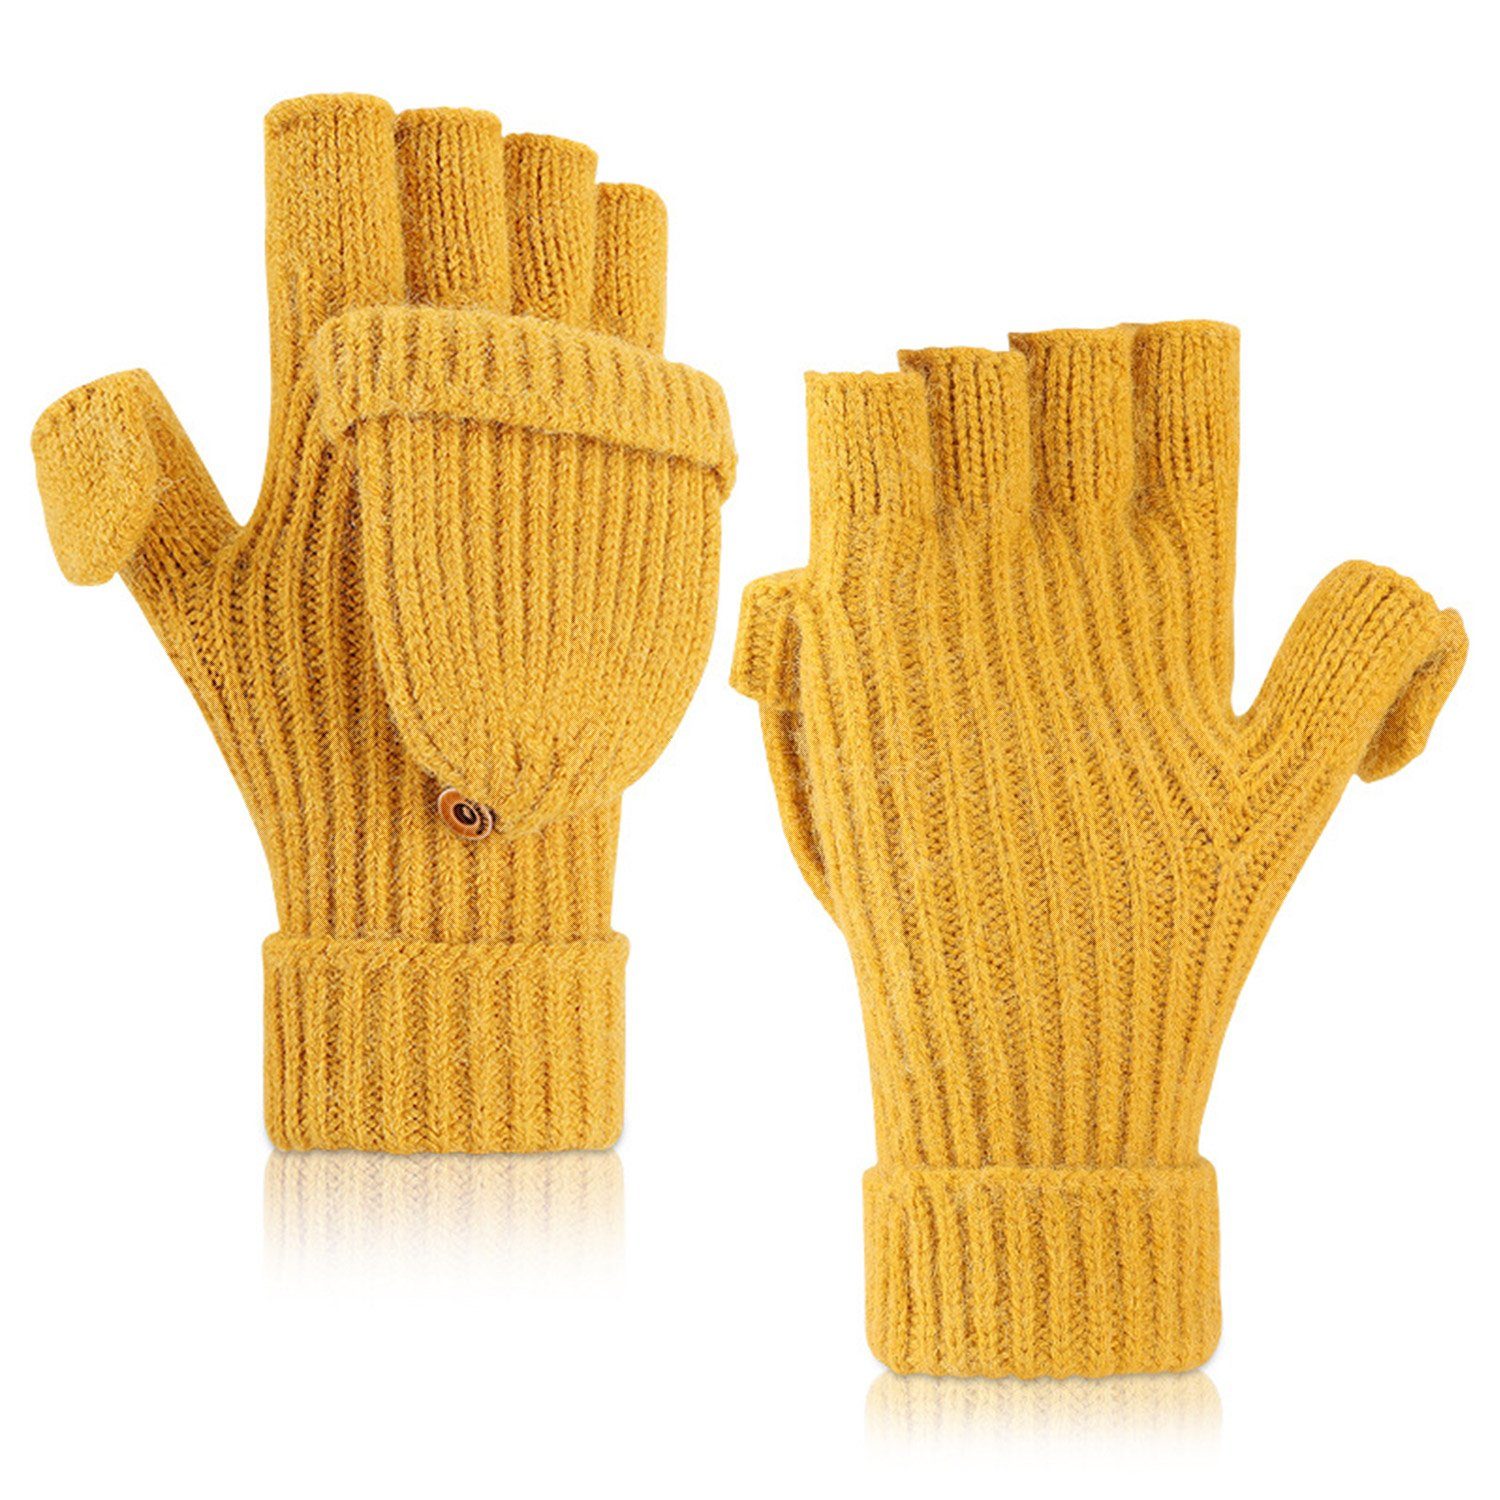 Daisred Baumwollhandschuhe Winterhandschuhe Damen Herren Strick halbe Handschuhe Gelb